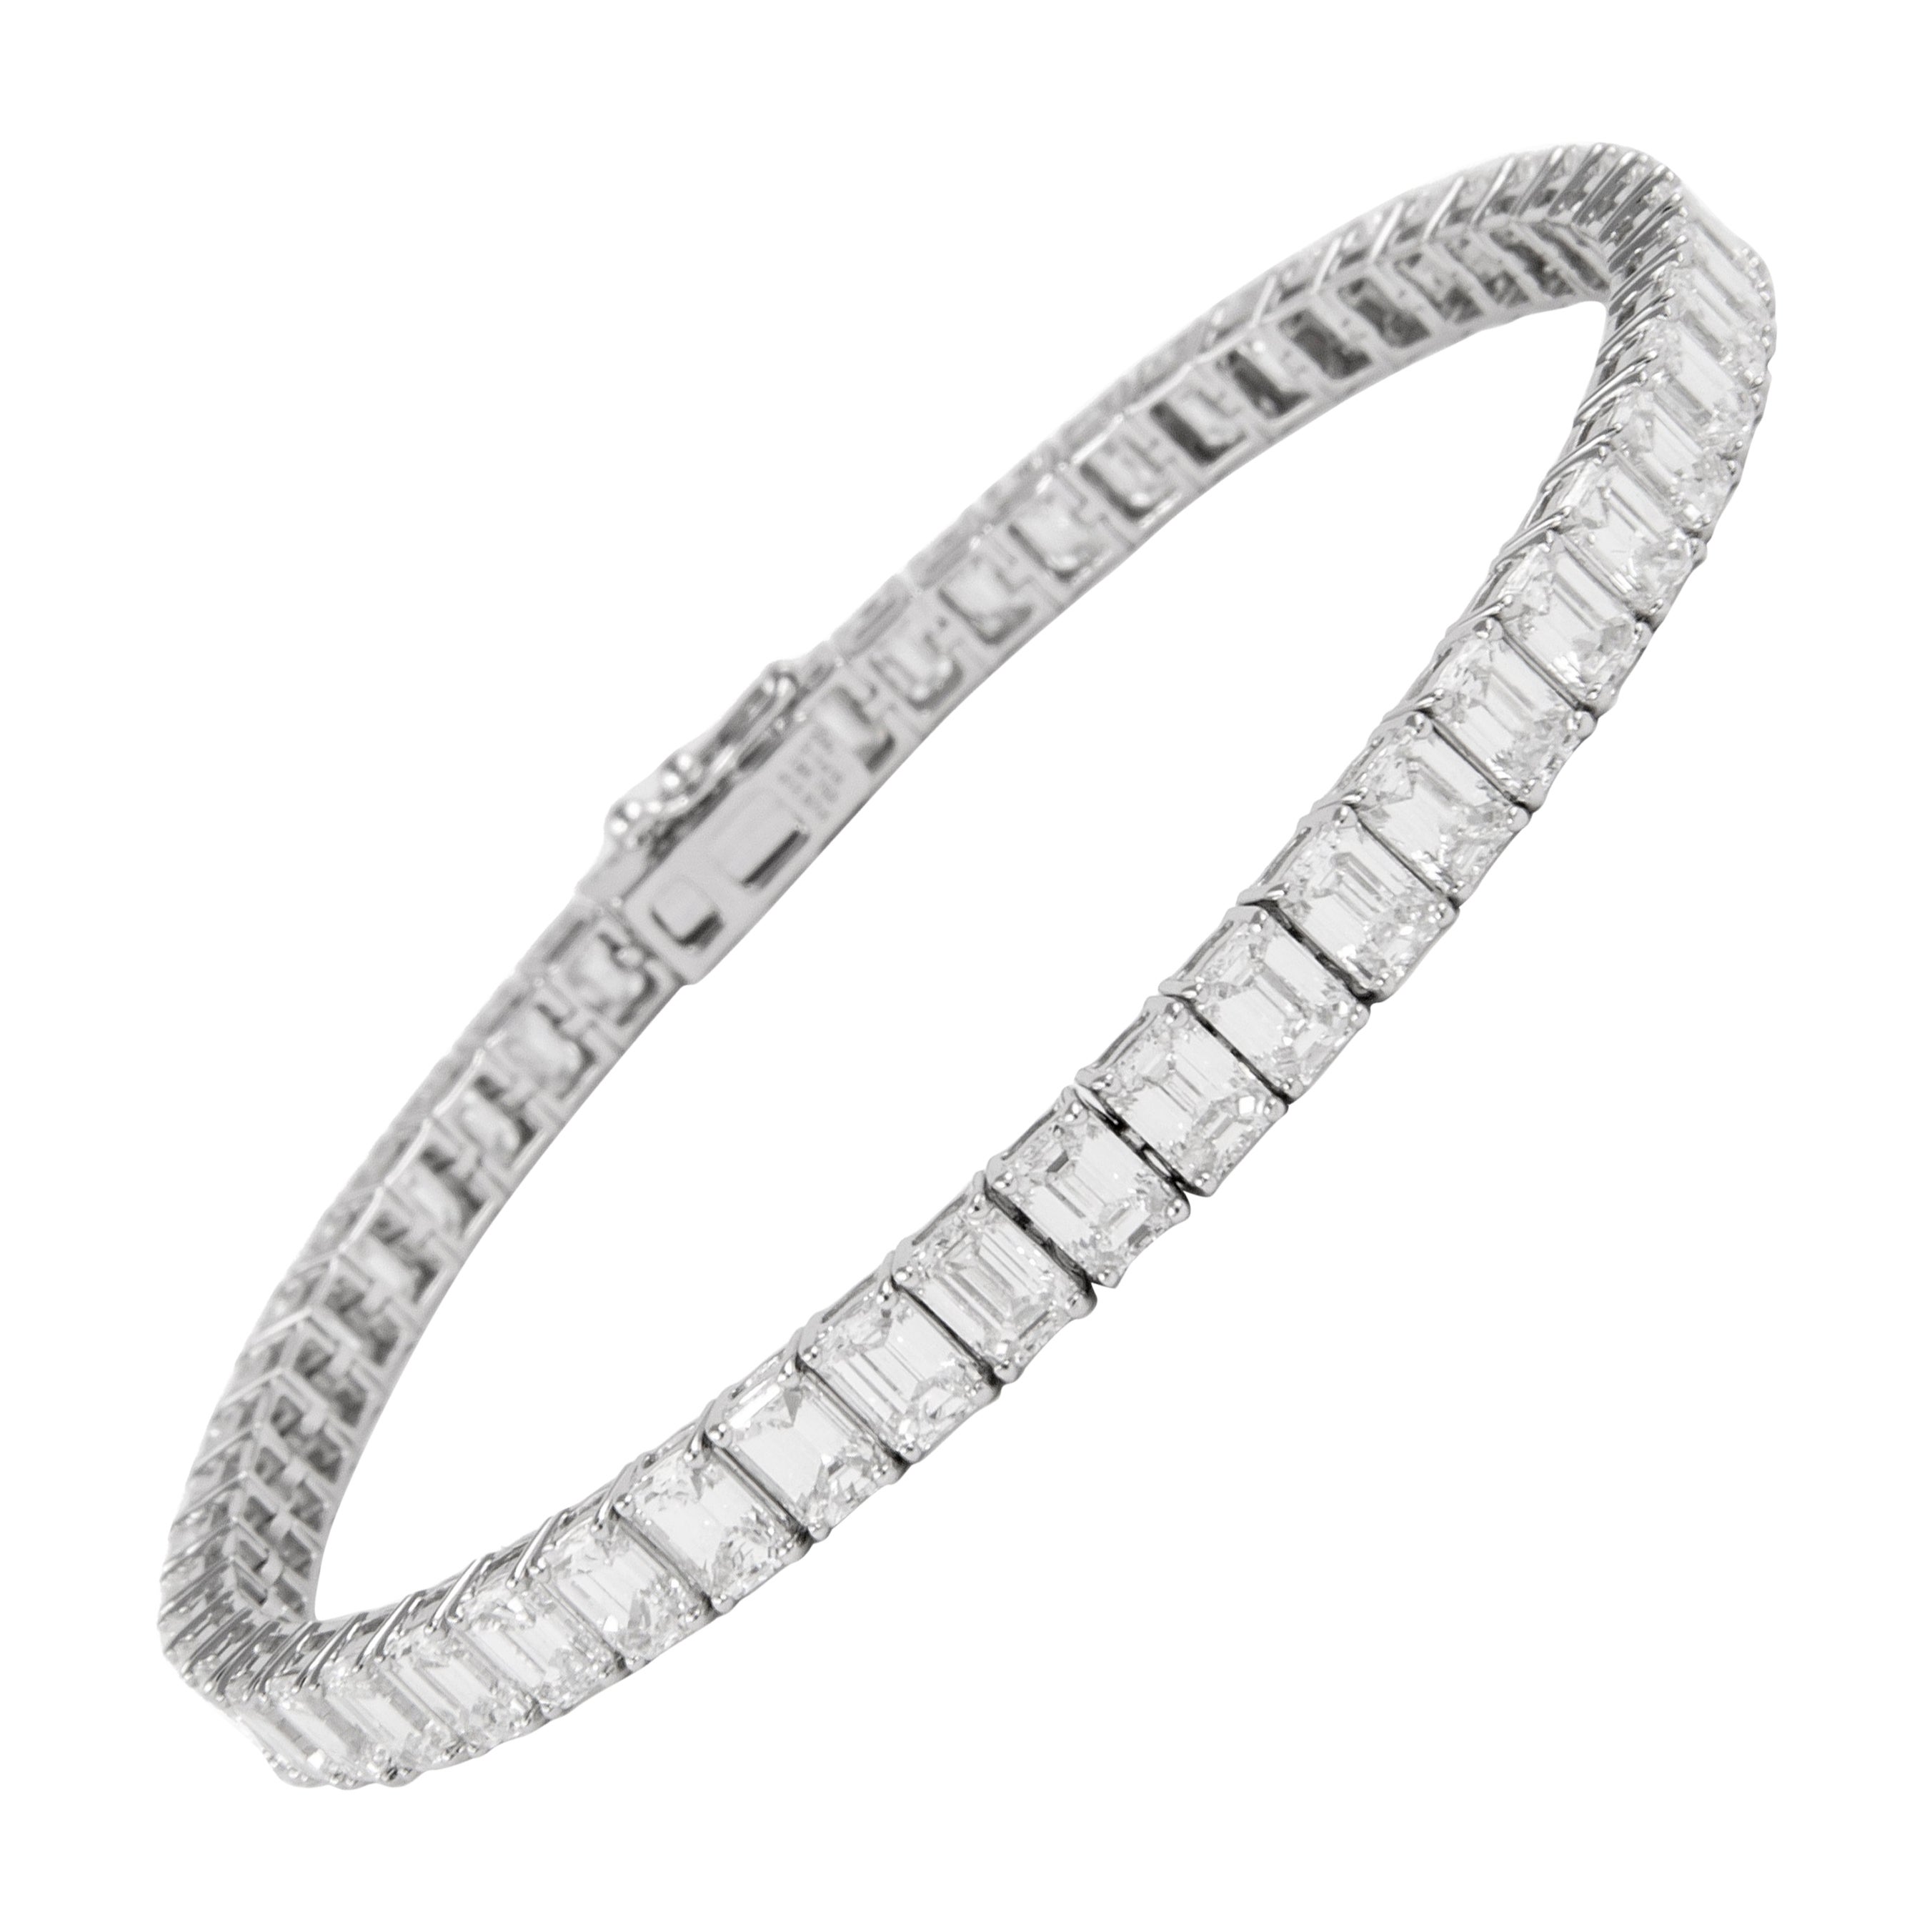 Alexander 12.67 Carat Emerald Cut Diamond Tennis Bracelet 18-Karat White Gold For Sale